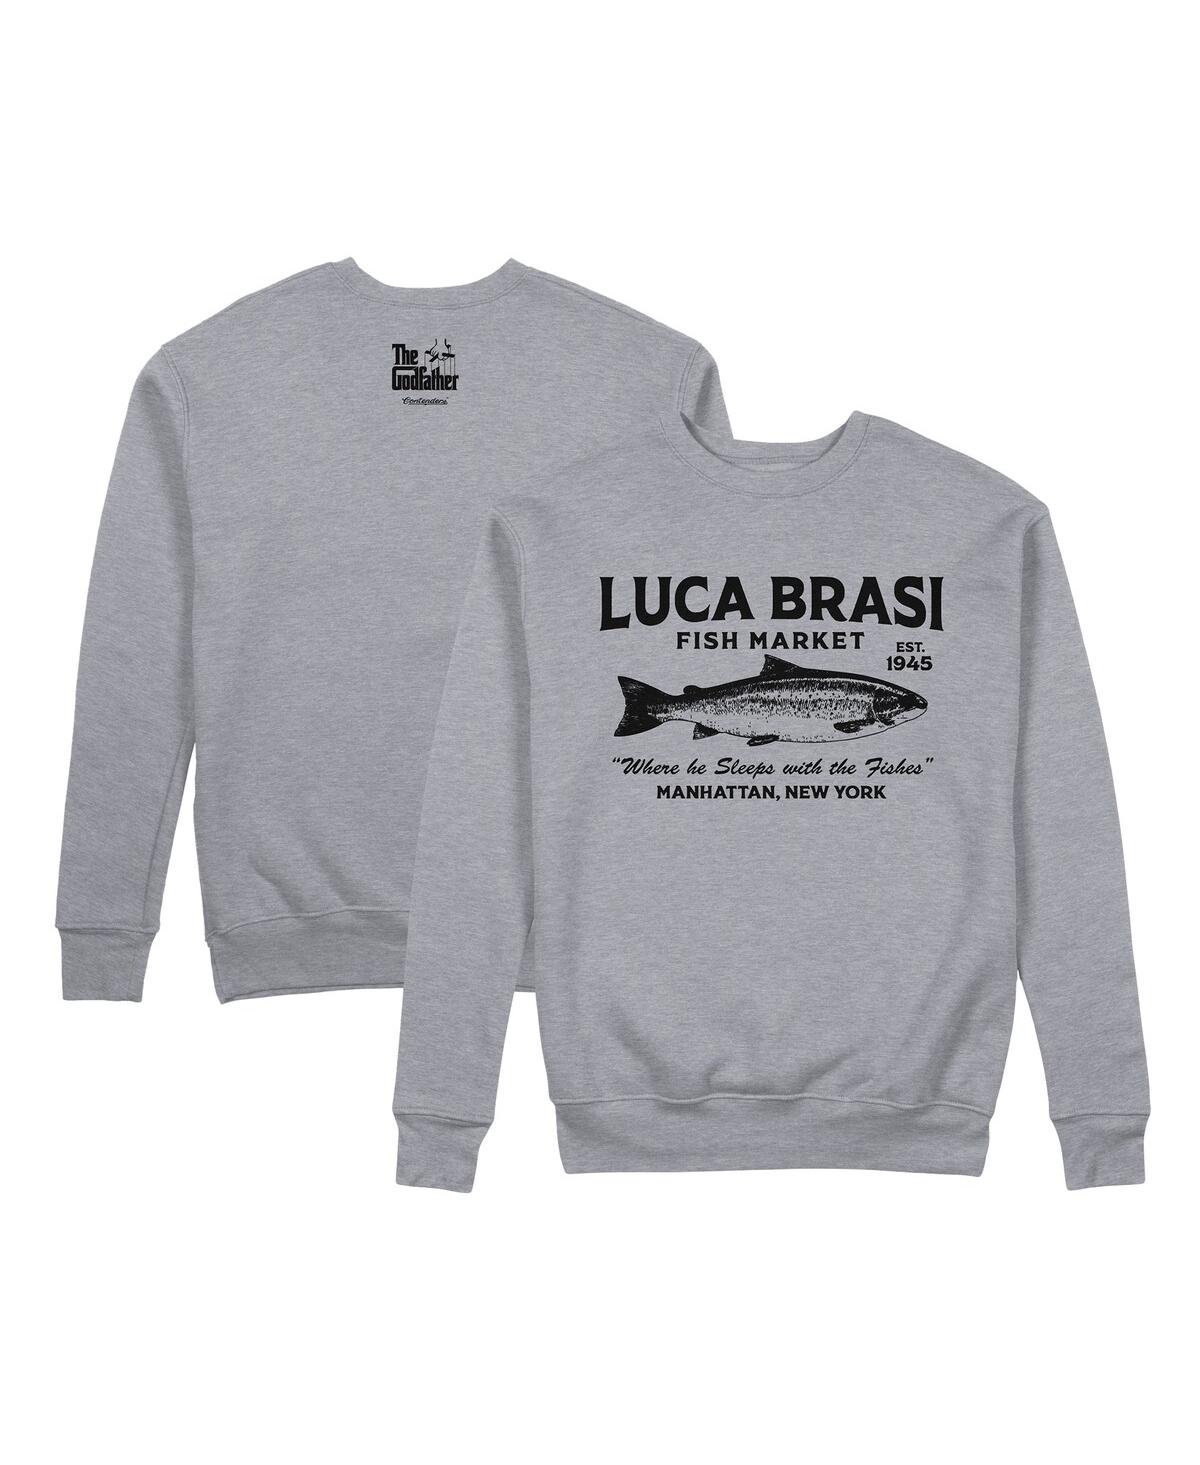 Men's Contenders Clothing Heather Gray The Godfather Luca Brasi Fish Market Pullover Sweatshirt - Heather Gray